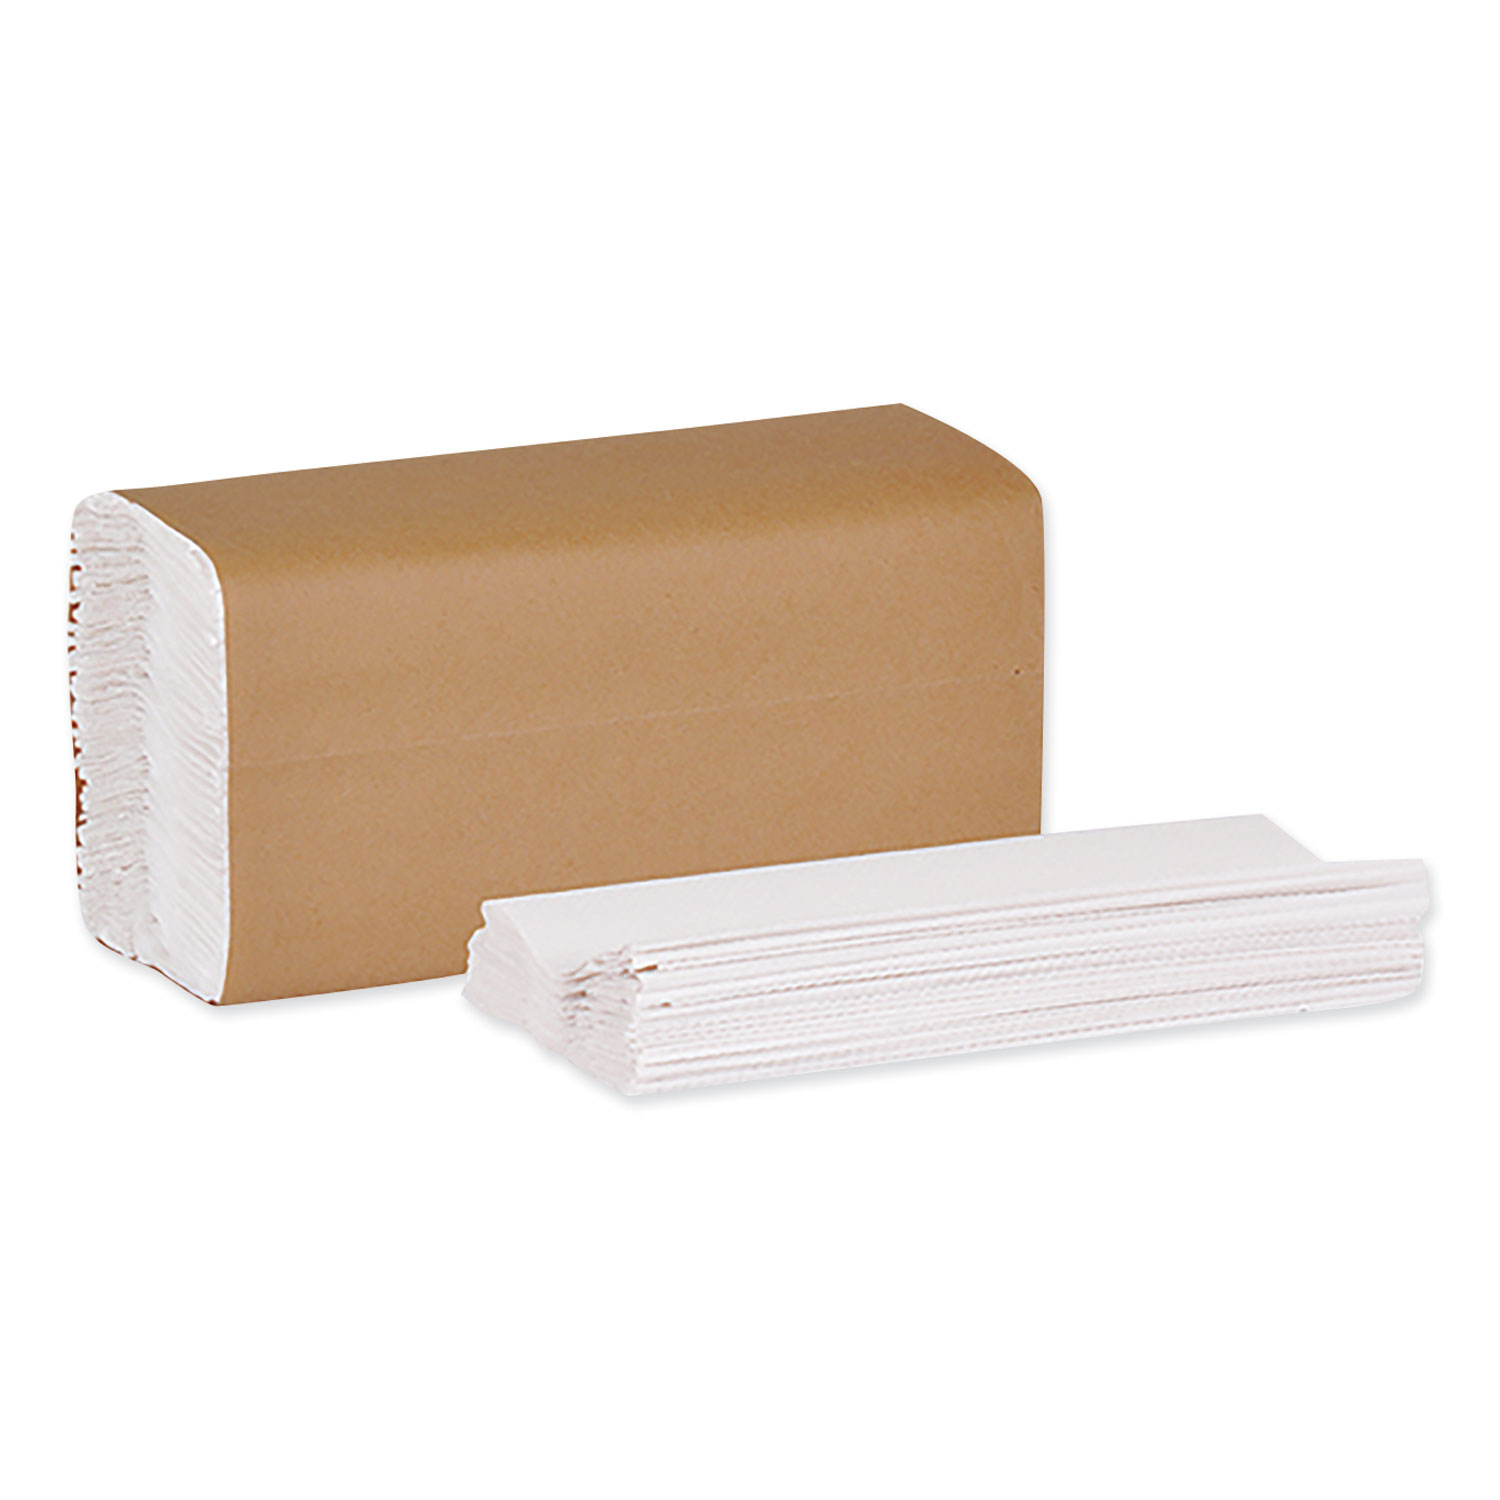  Tork 250630 C-Fold Hand Towel, 1-Ply, 10.13 x 12.75, Natural White, 150/Pack, 16 Packs/Carton (TRK250630) 